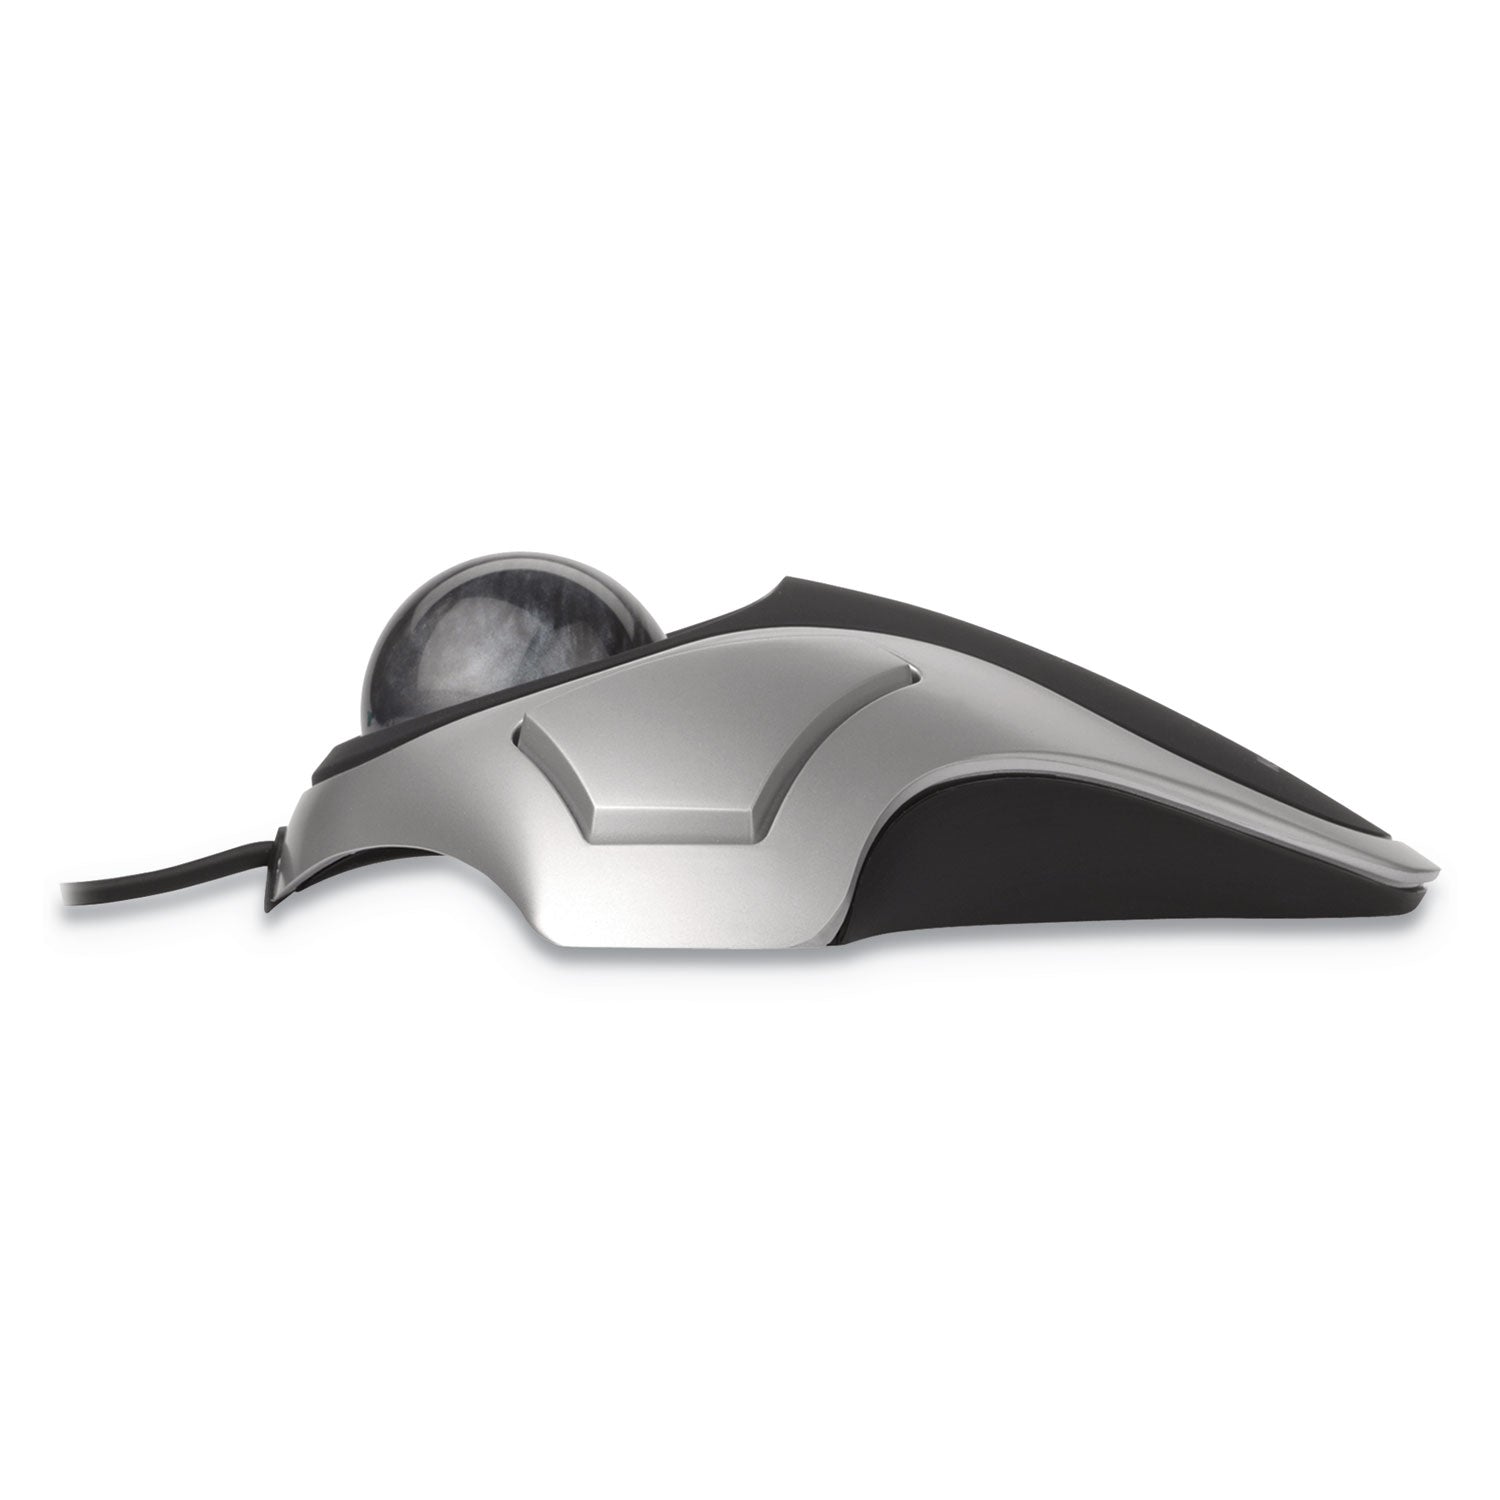 Orbit Optical Trackball Mouse, USB 2.0, Left/Right Hand Use, Black/Silver - 